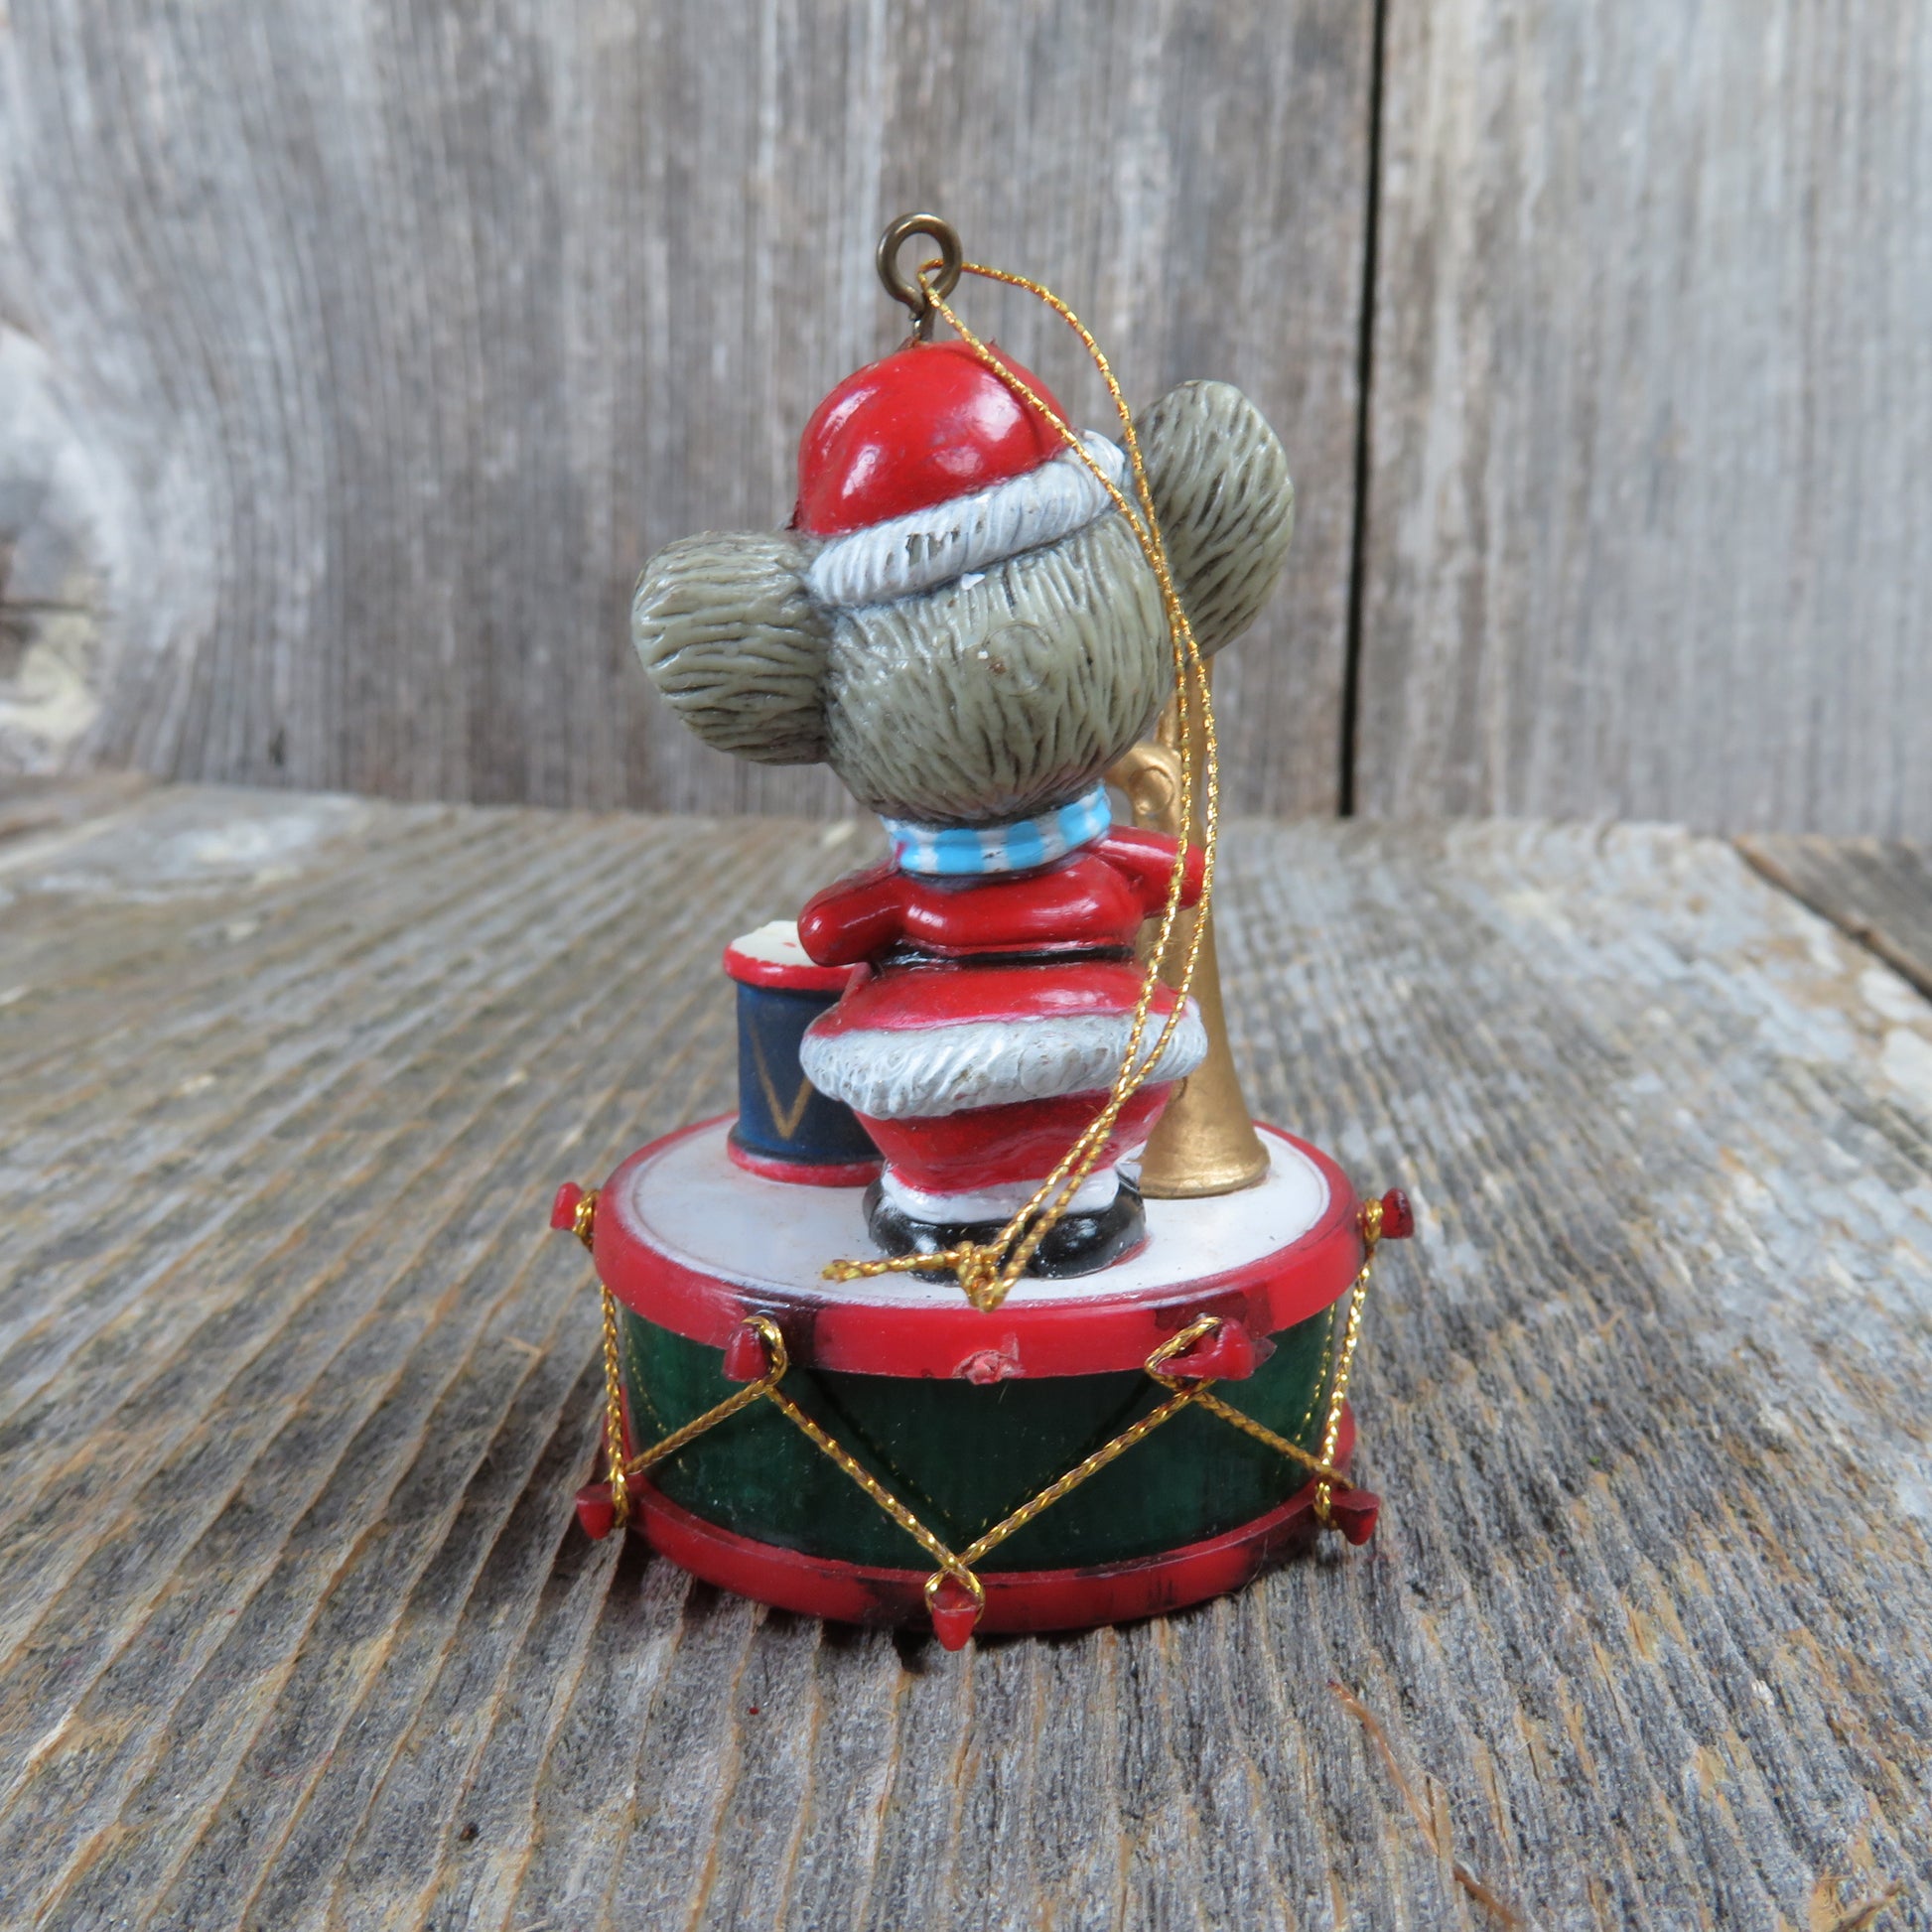 Vintage Mouse Drum Horn Christmas Ornament Plastic Trumpet Santa Suit Holiday Decor - At Grandma's Table